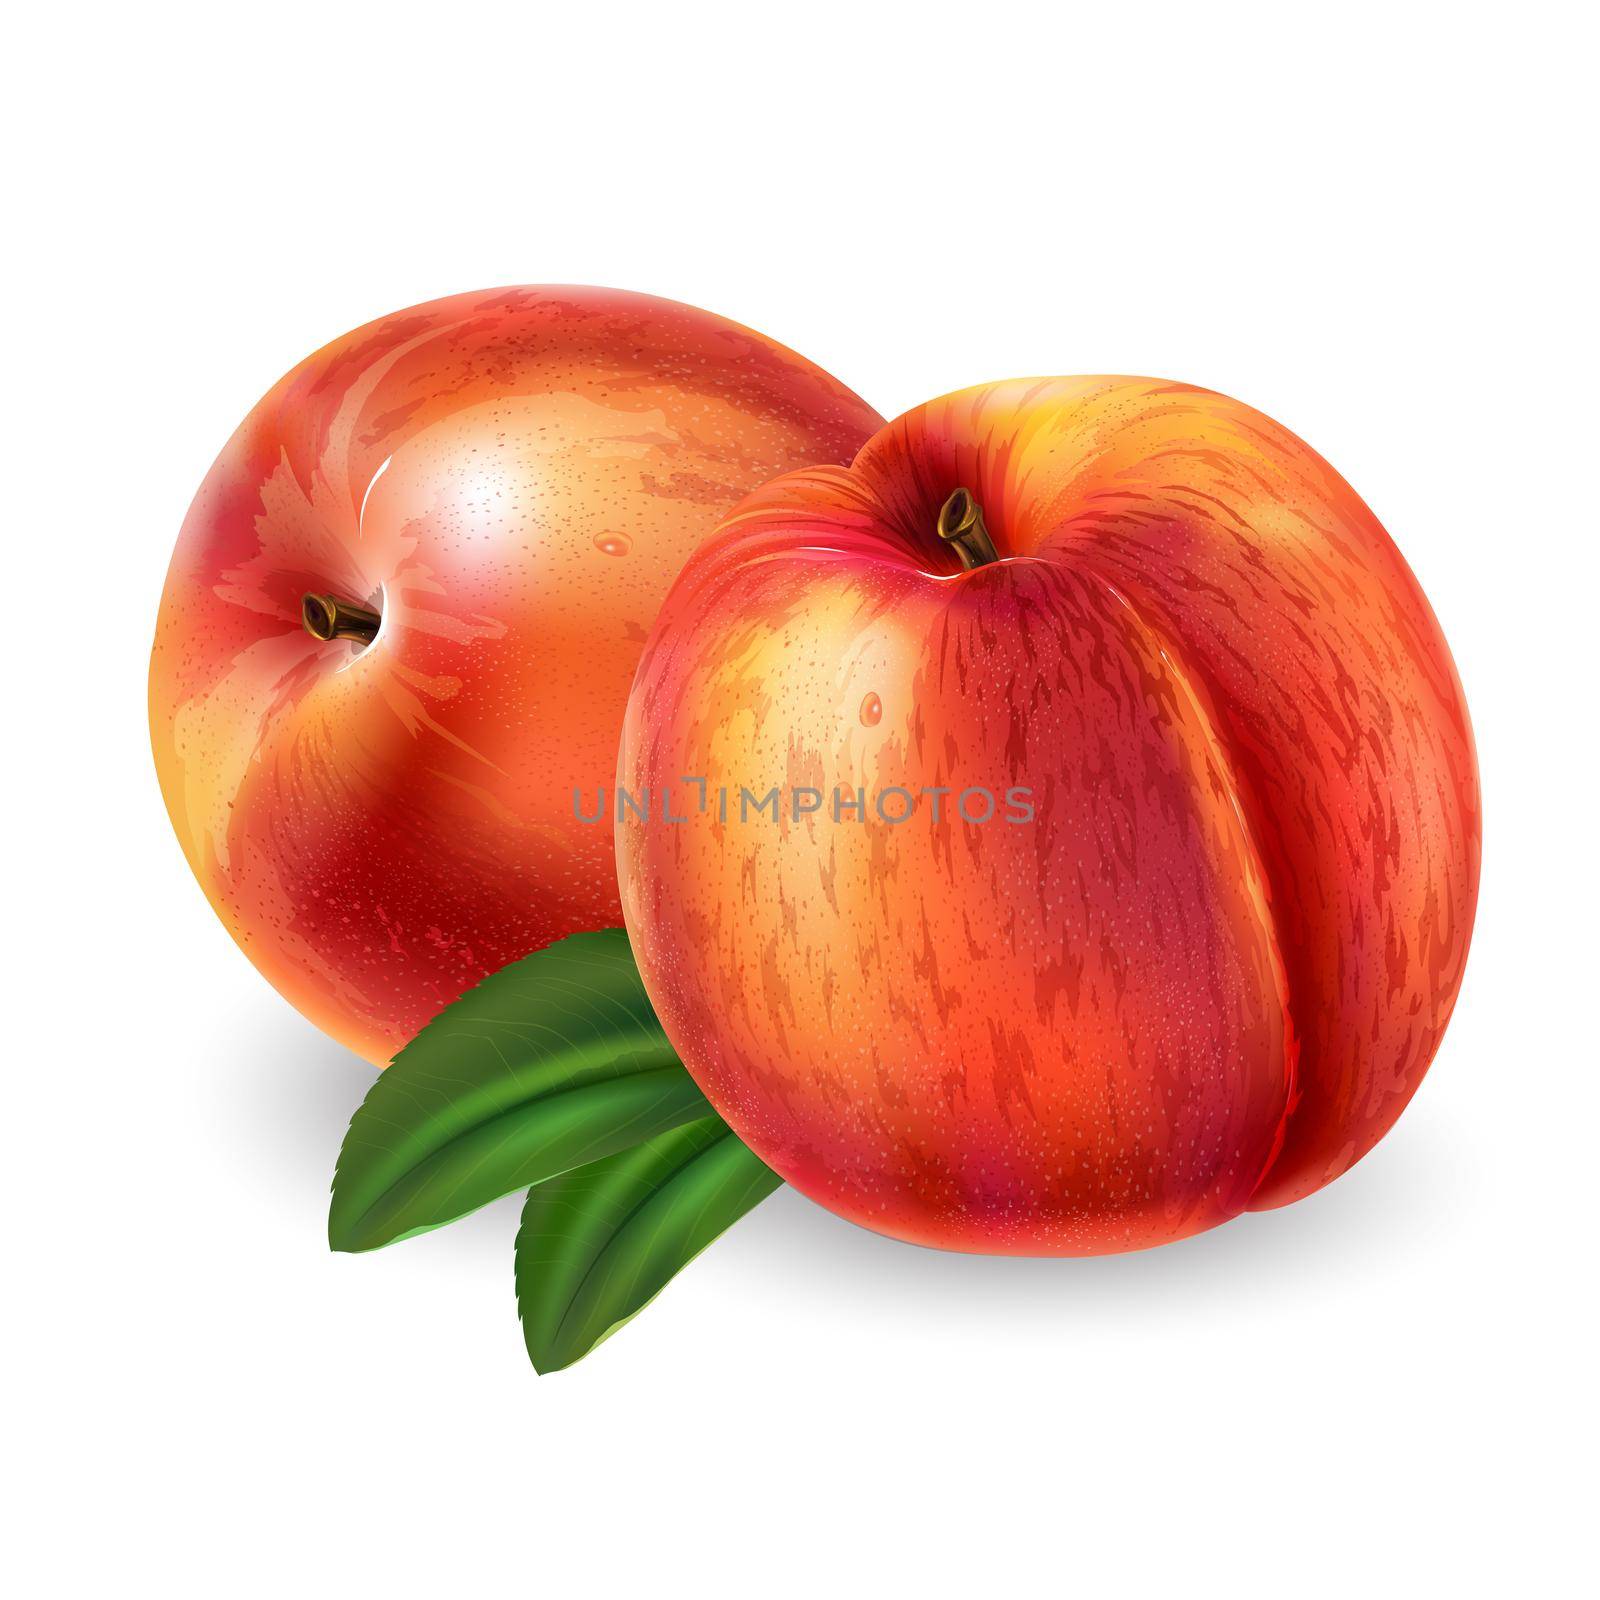 Fresh ripe peach - healthy food design. Realistic style illustration.